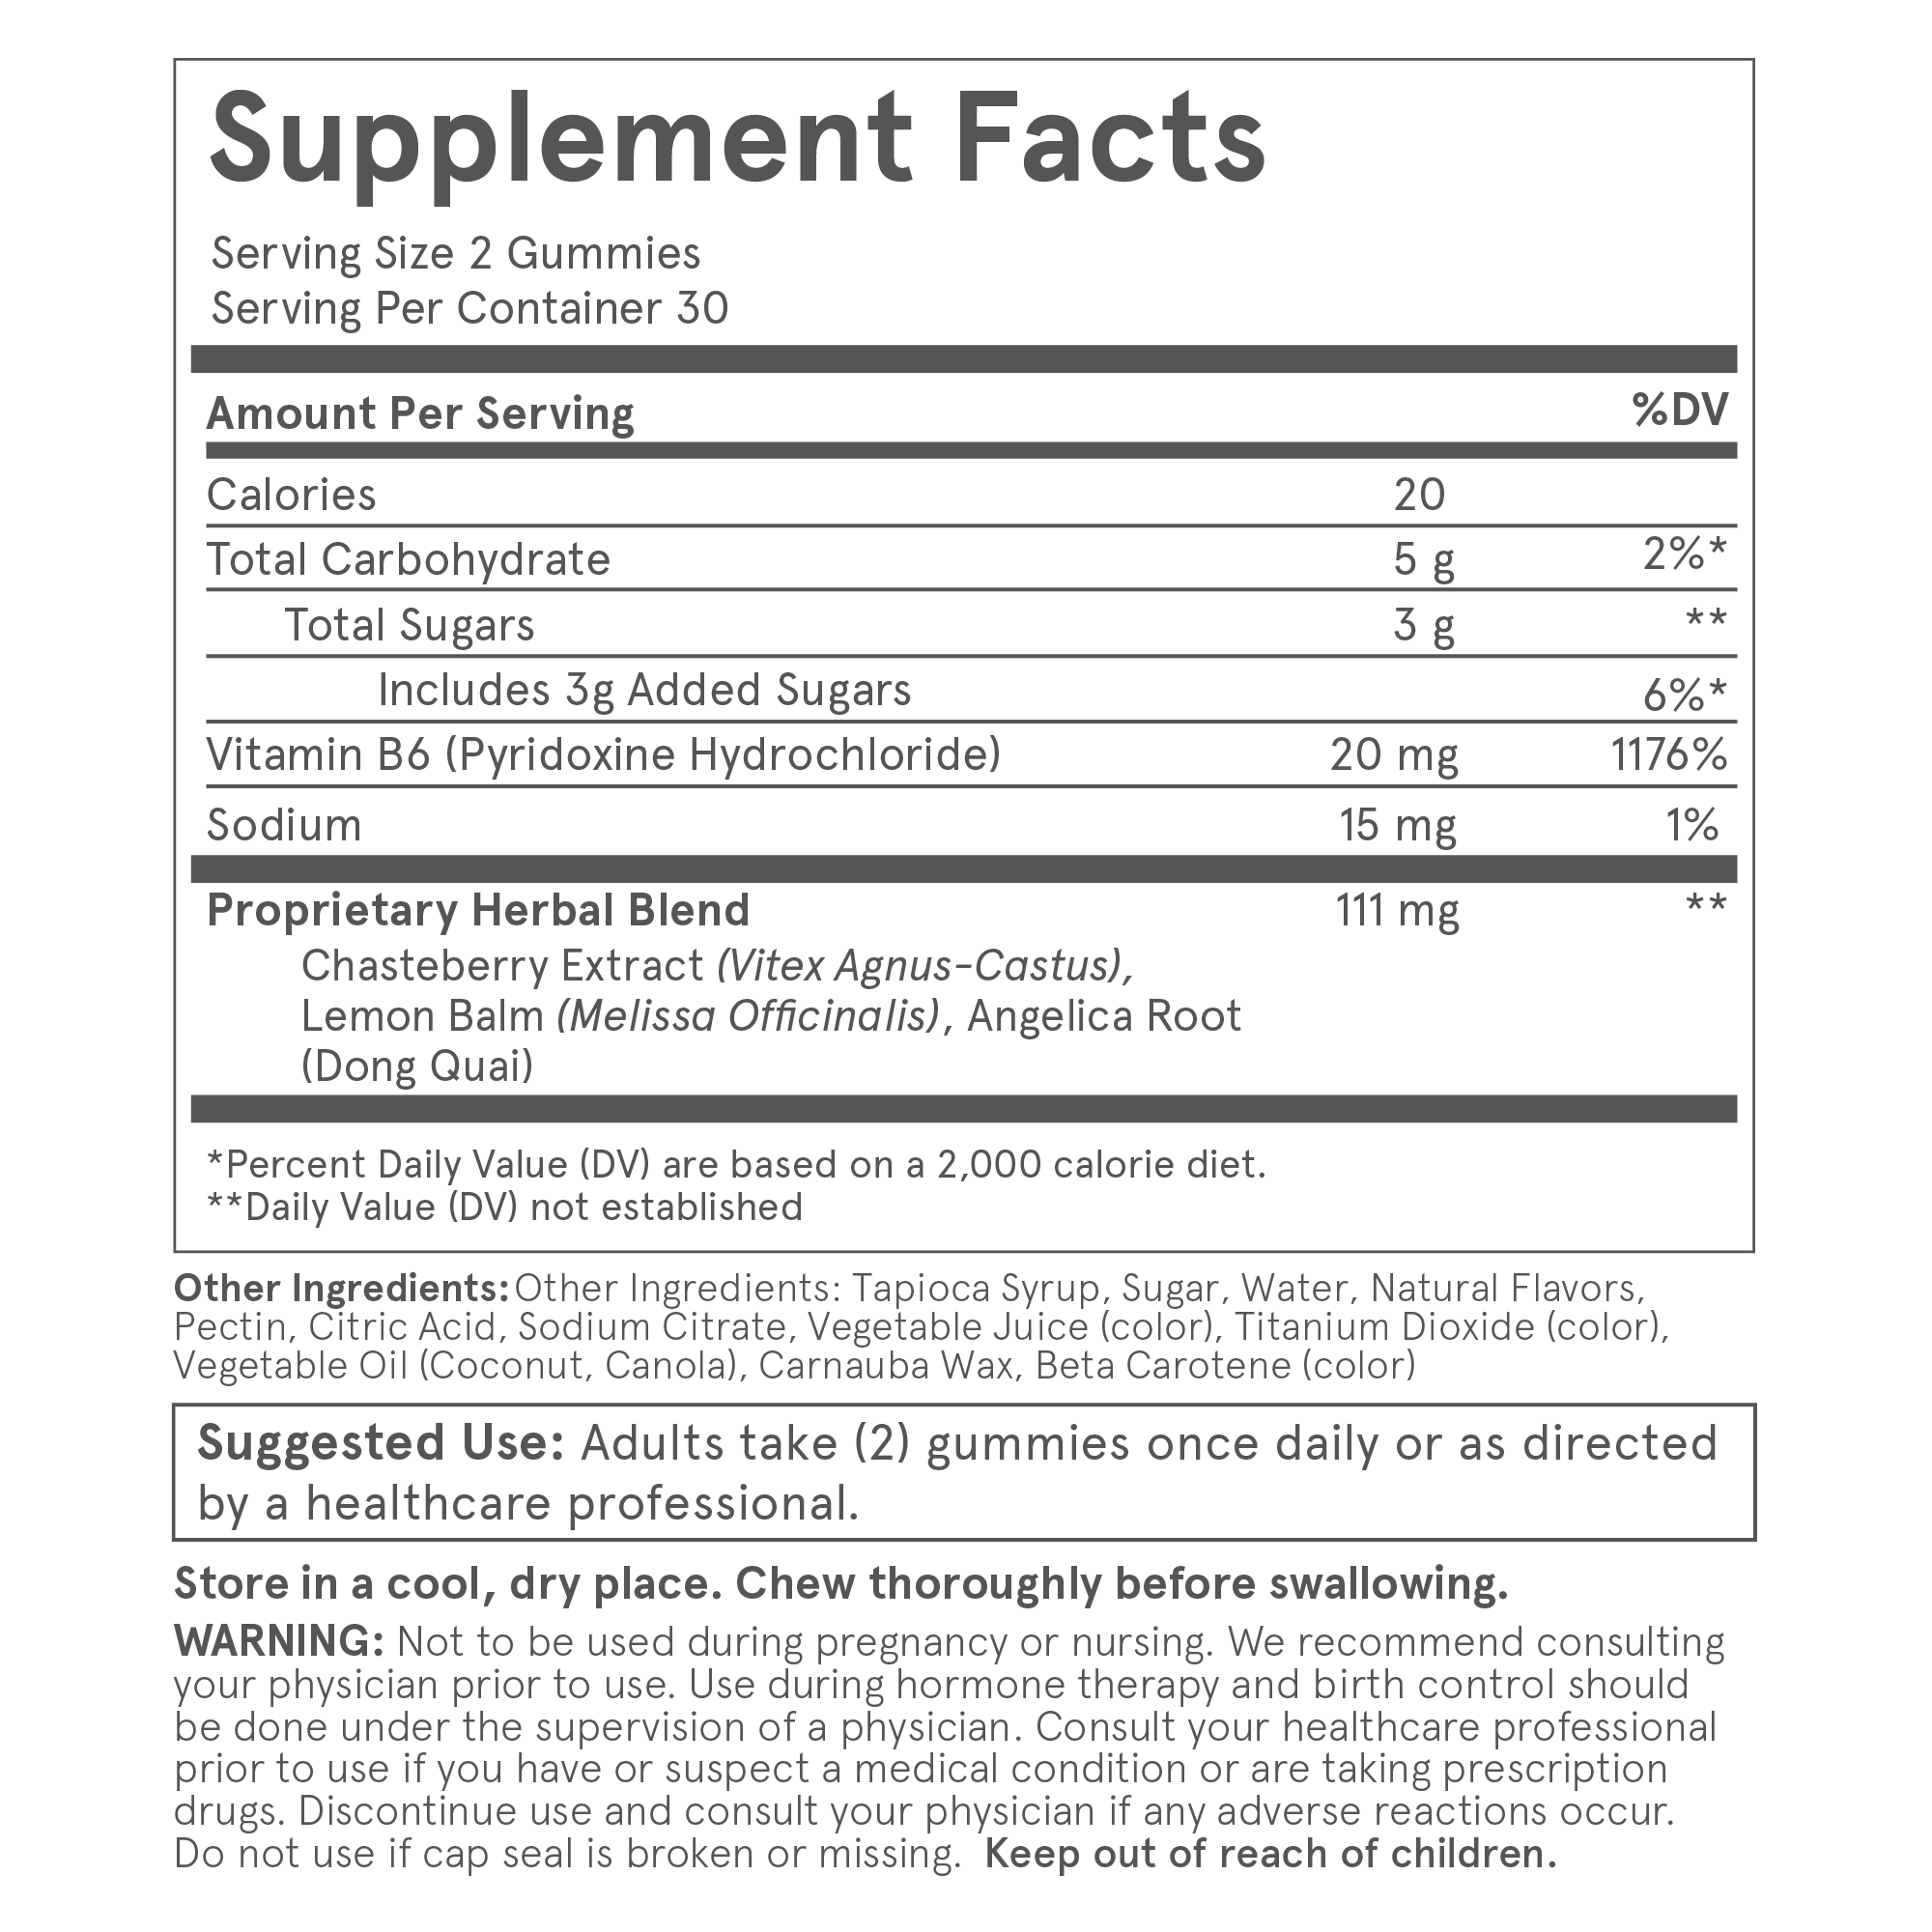 FLO PMS Gummy Vitamins Supplement Facts